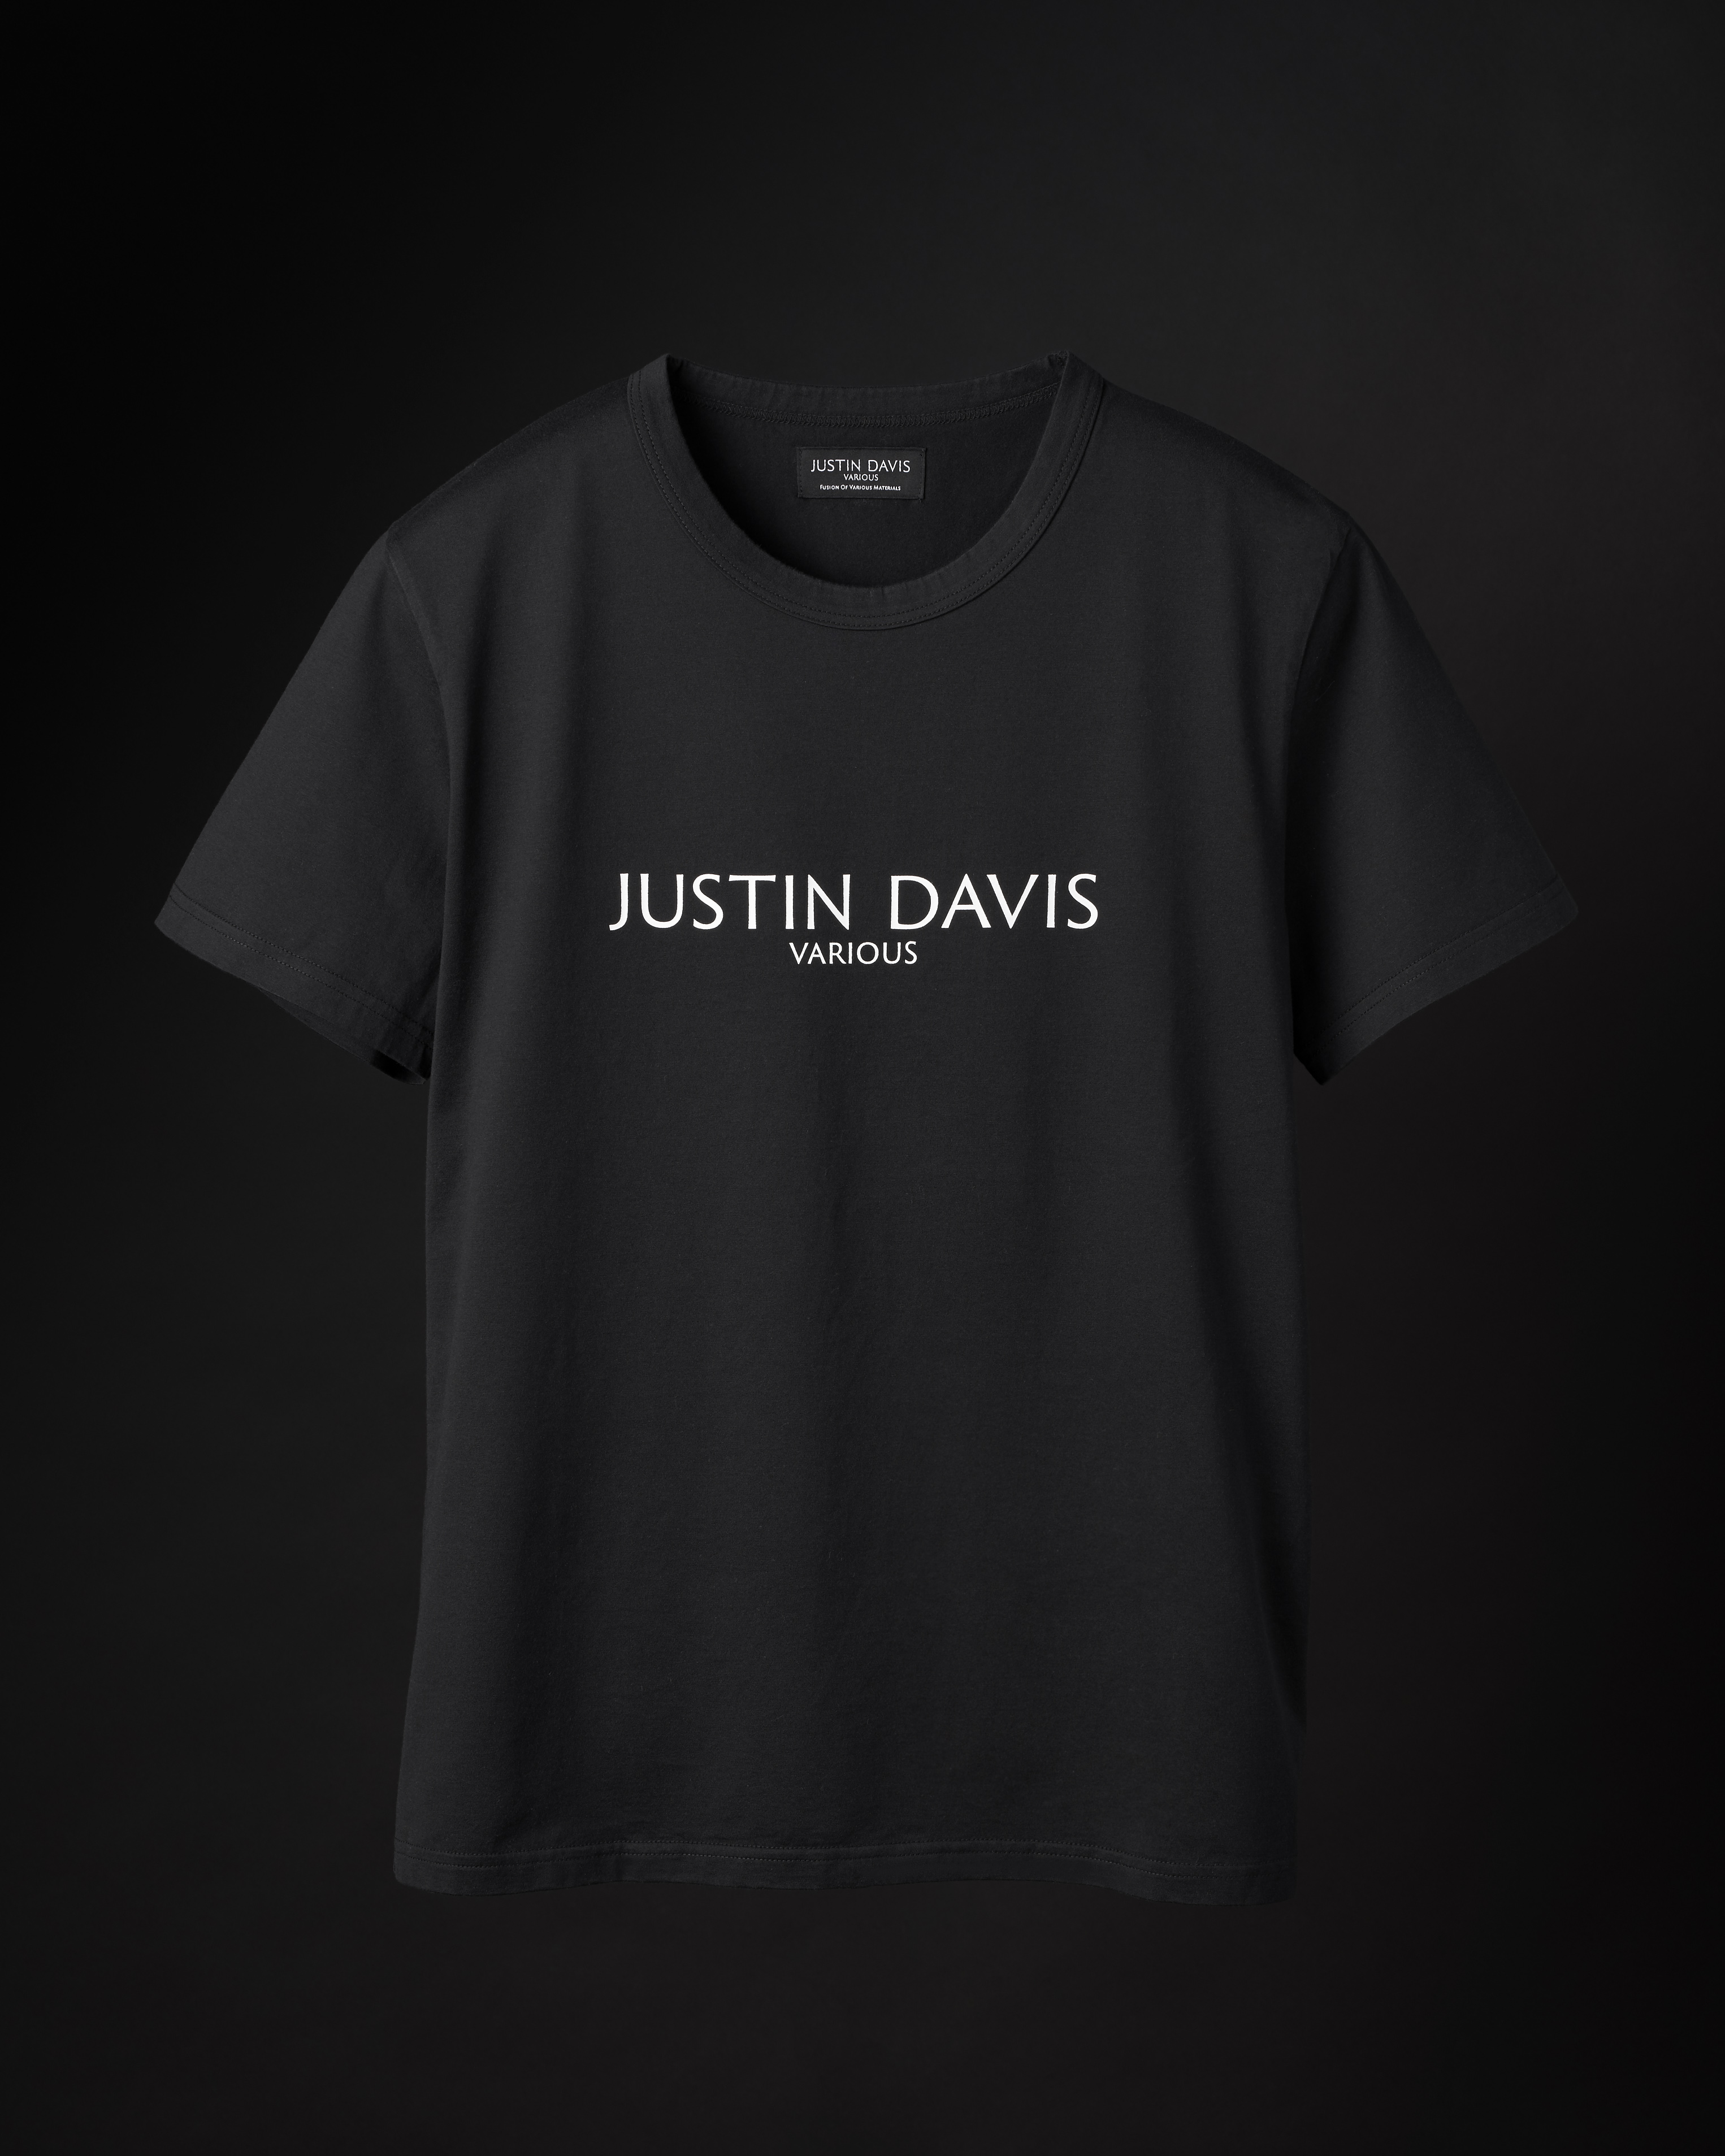 JUSTIN DAVIS VARIOUS CLOTHINGからブランド初となる ウェアライン